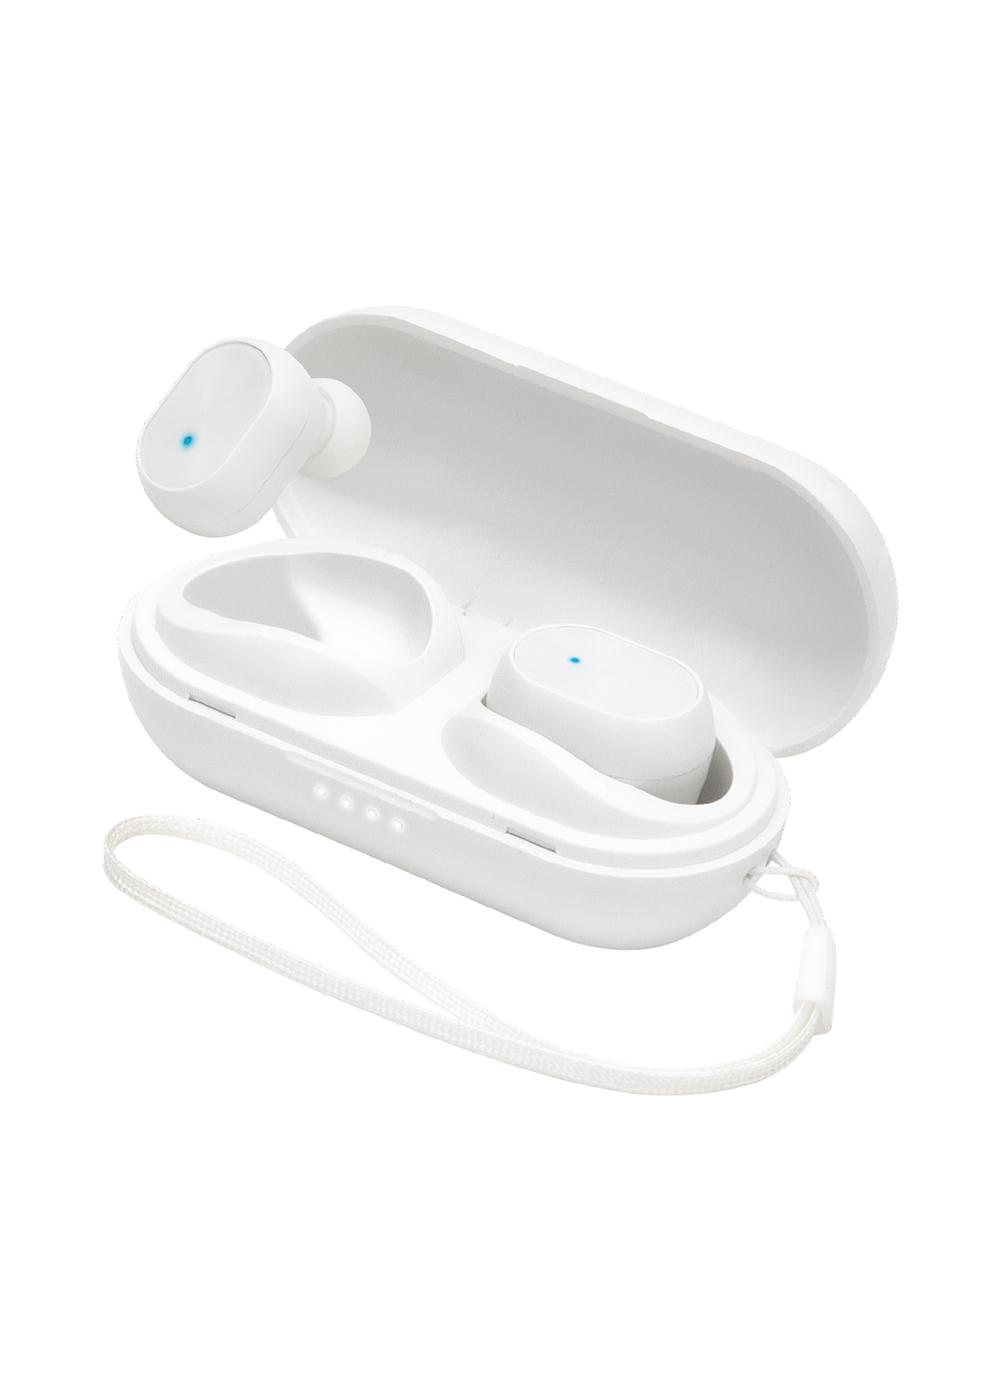 Helix True Wireless High Fidelity Earbuds - White; image 2 of 2